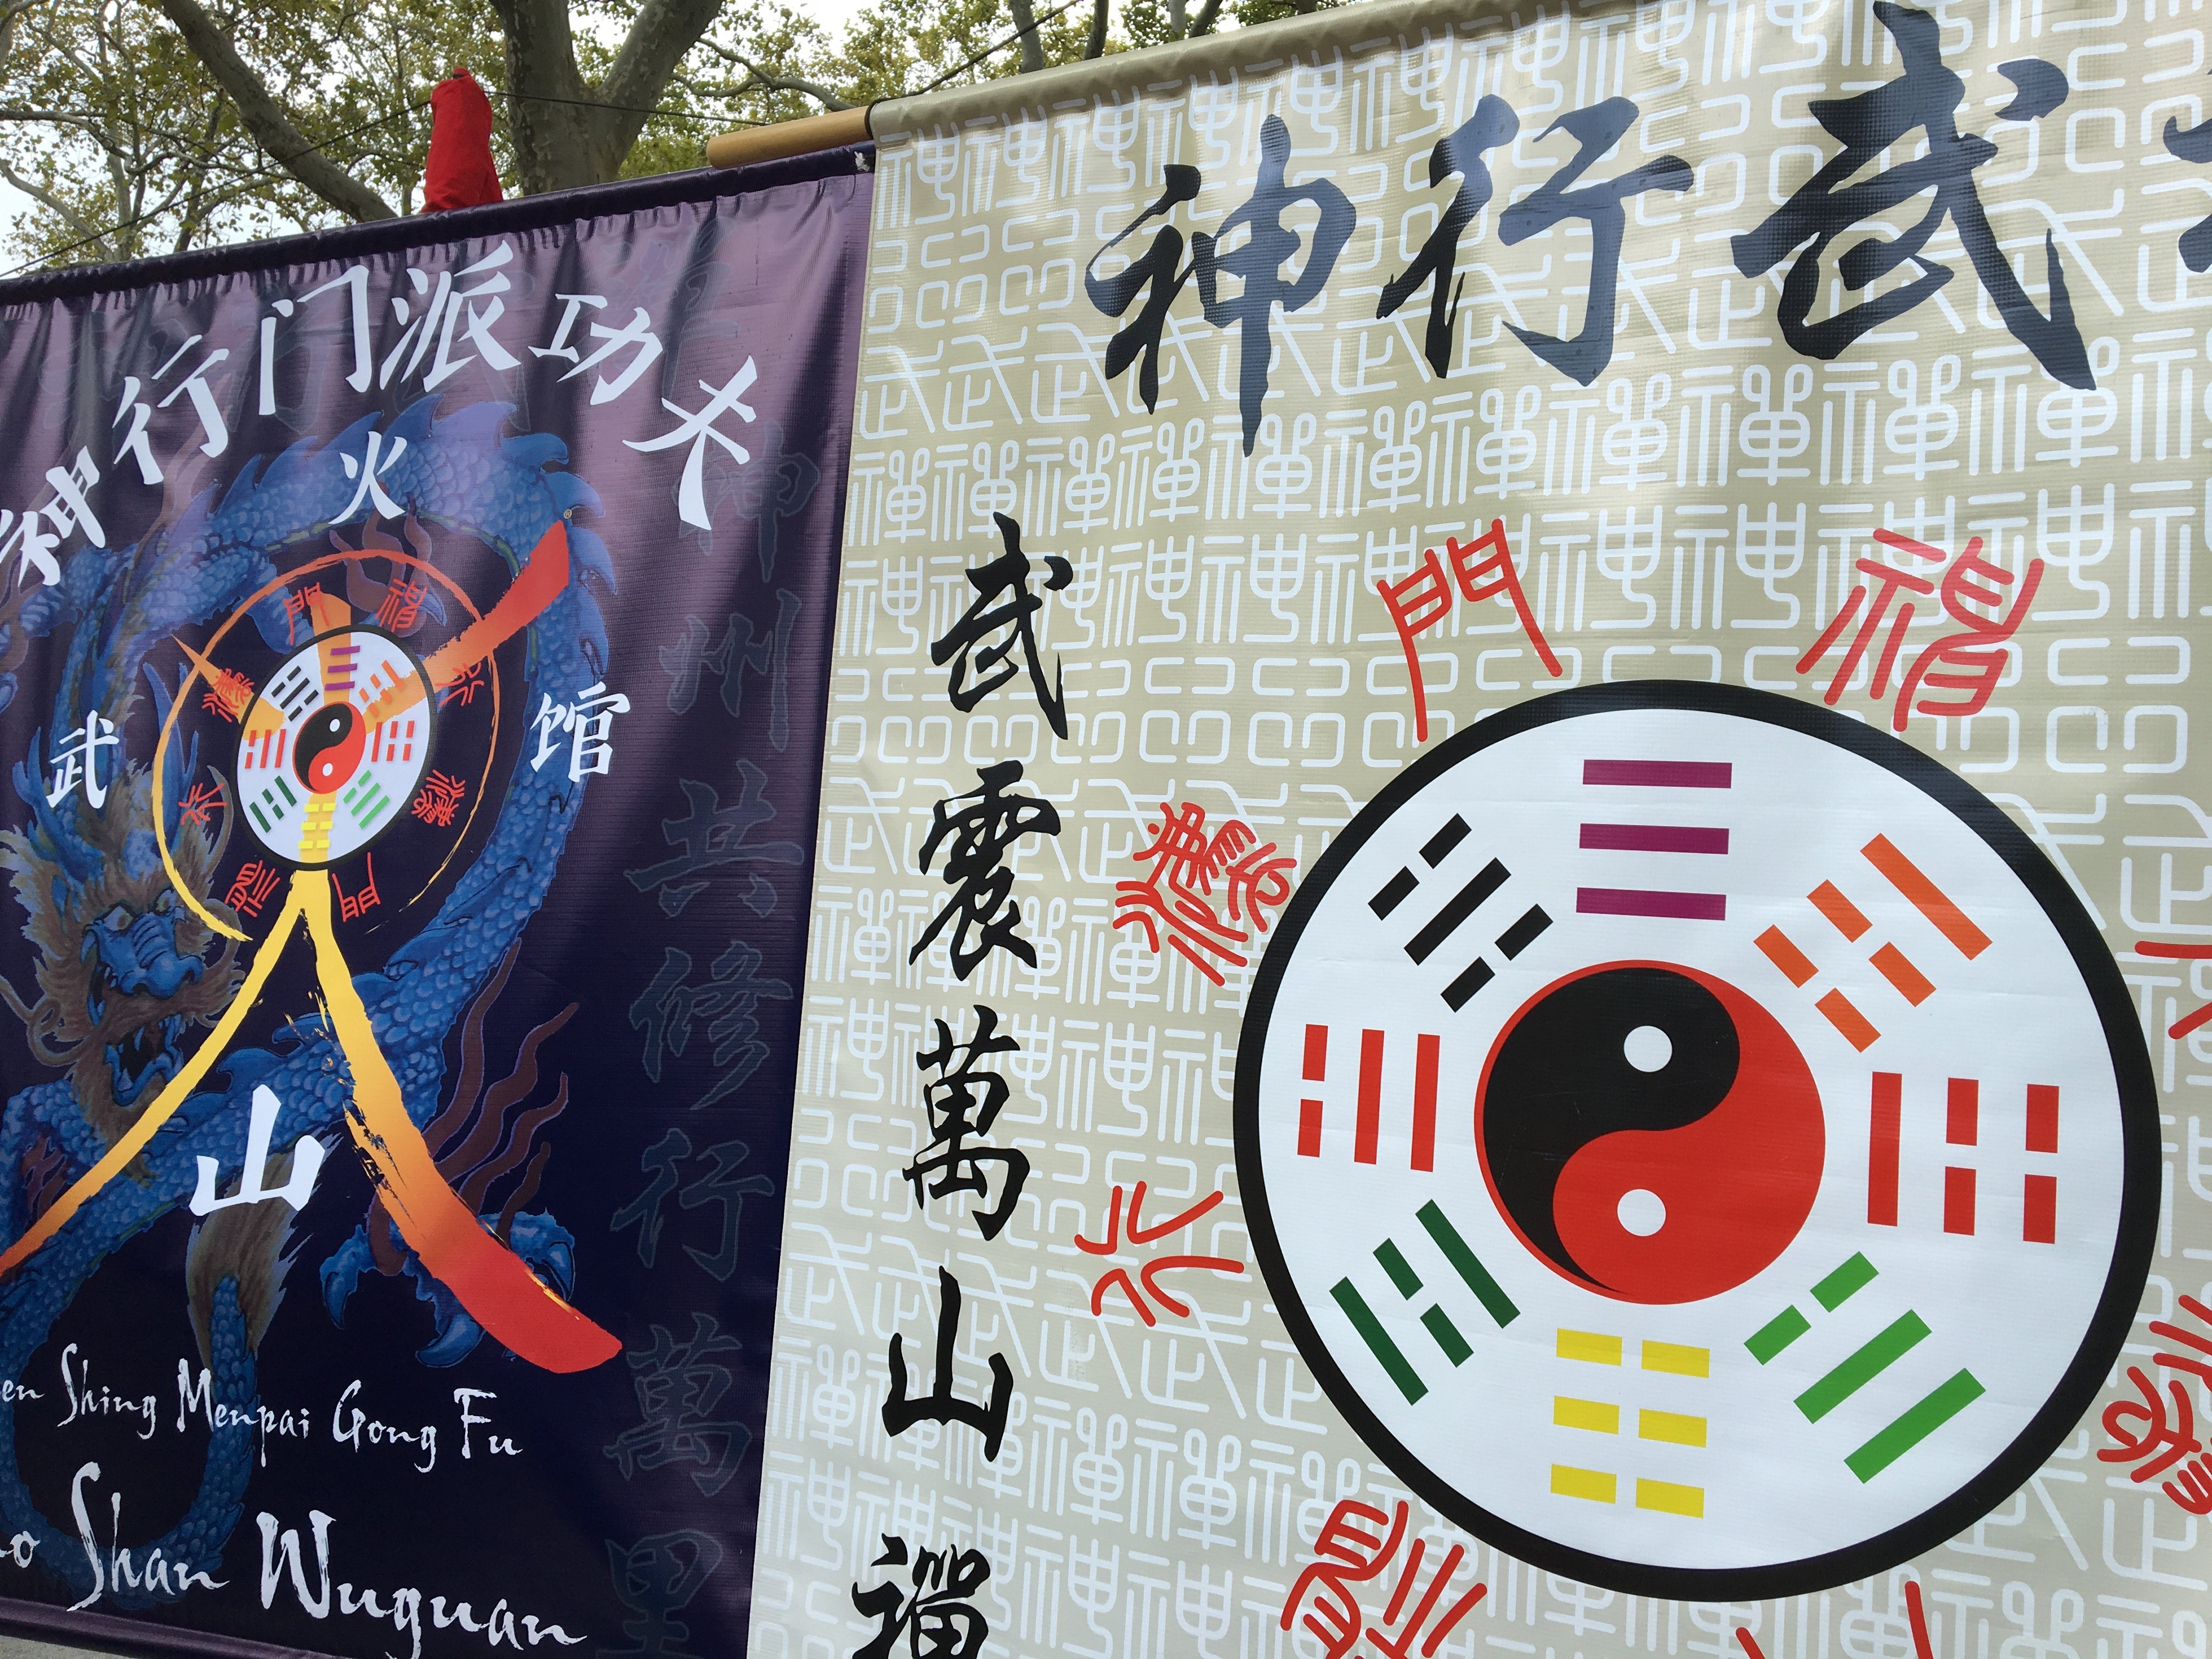 Huo Shan Wu Guan Banner and Master Tian's banner